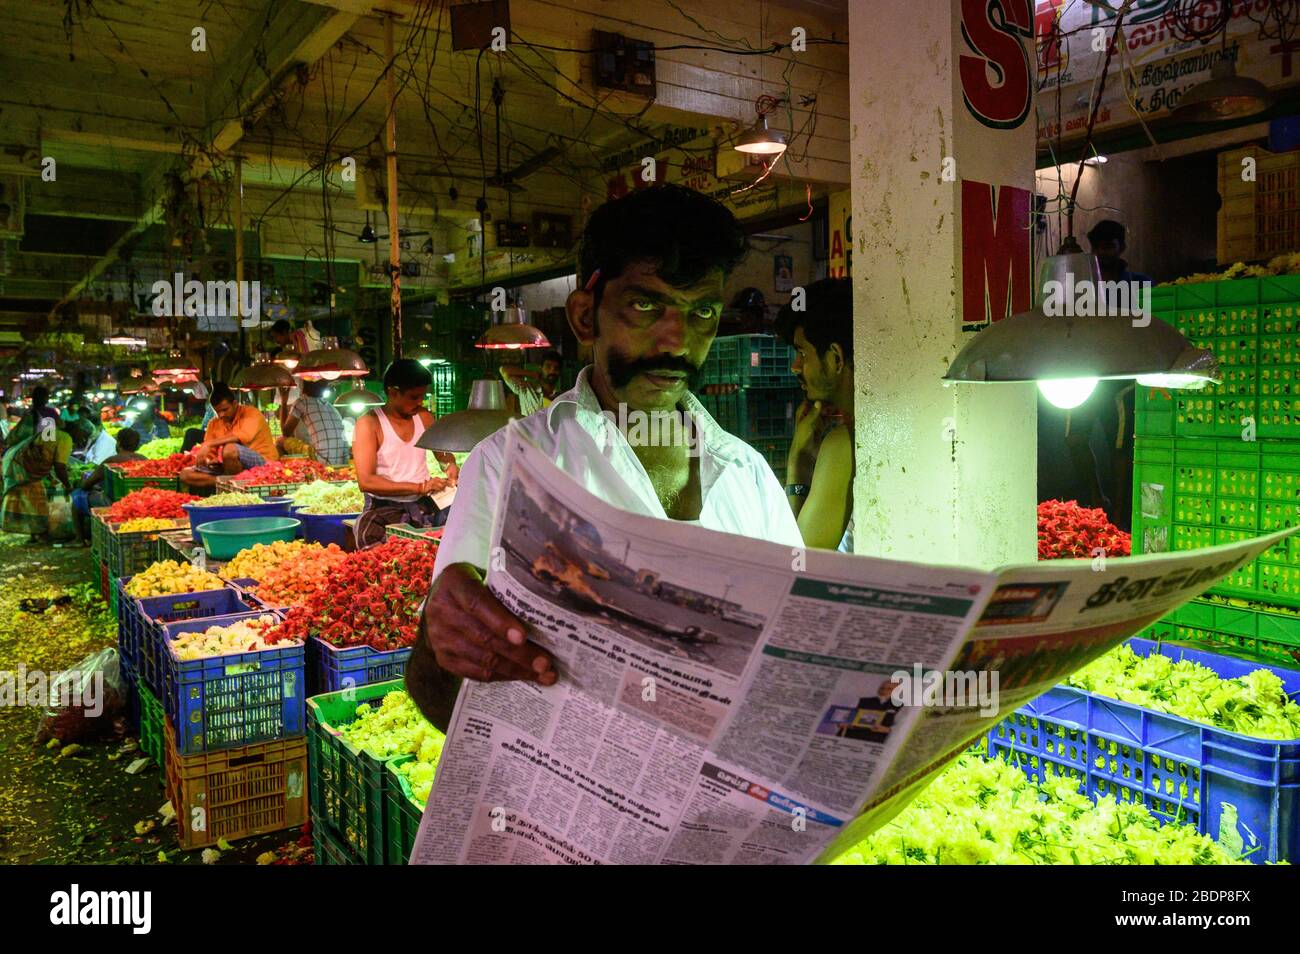 Produce vendor reading a newspaper, Koyambedu Market,  Chennai, India. 4 November 2019 Stock Photo